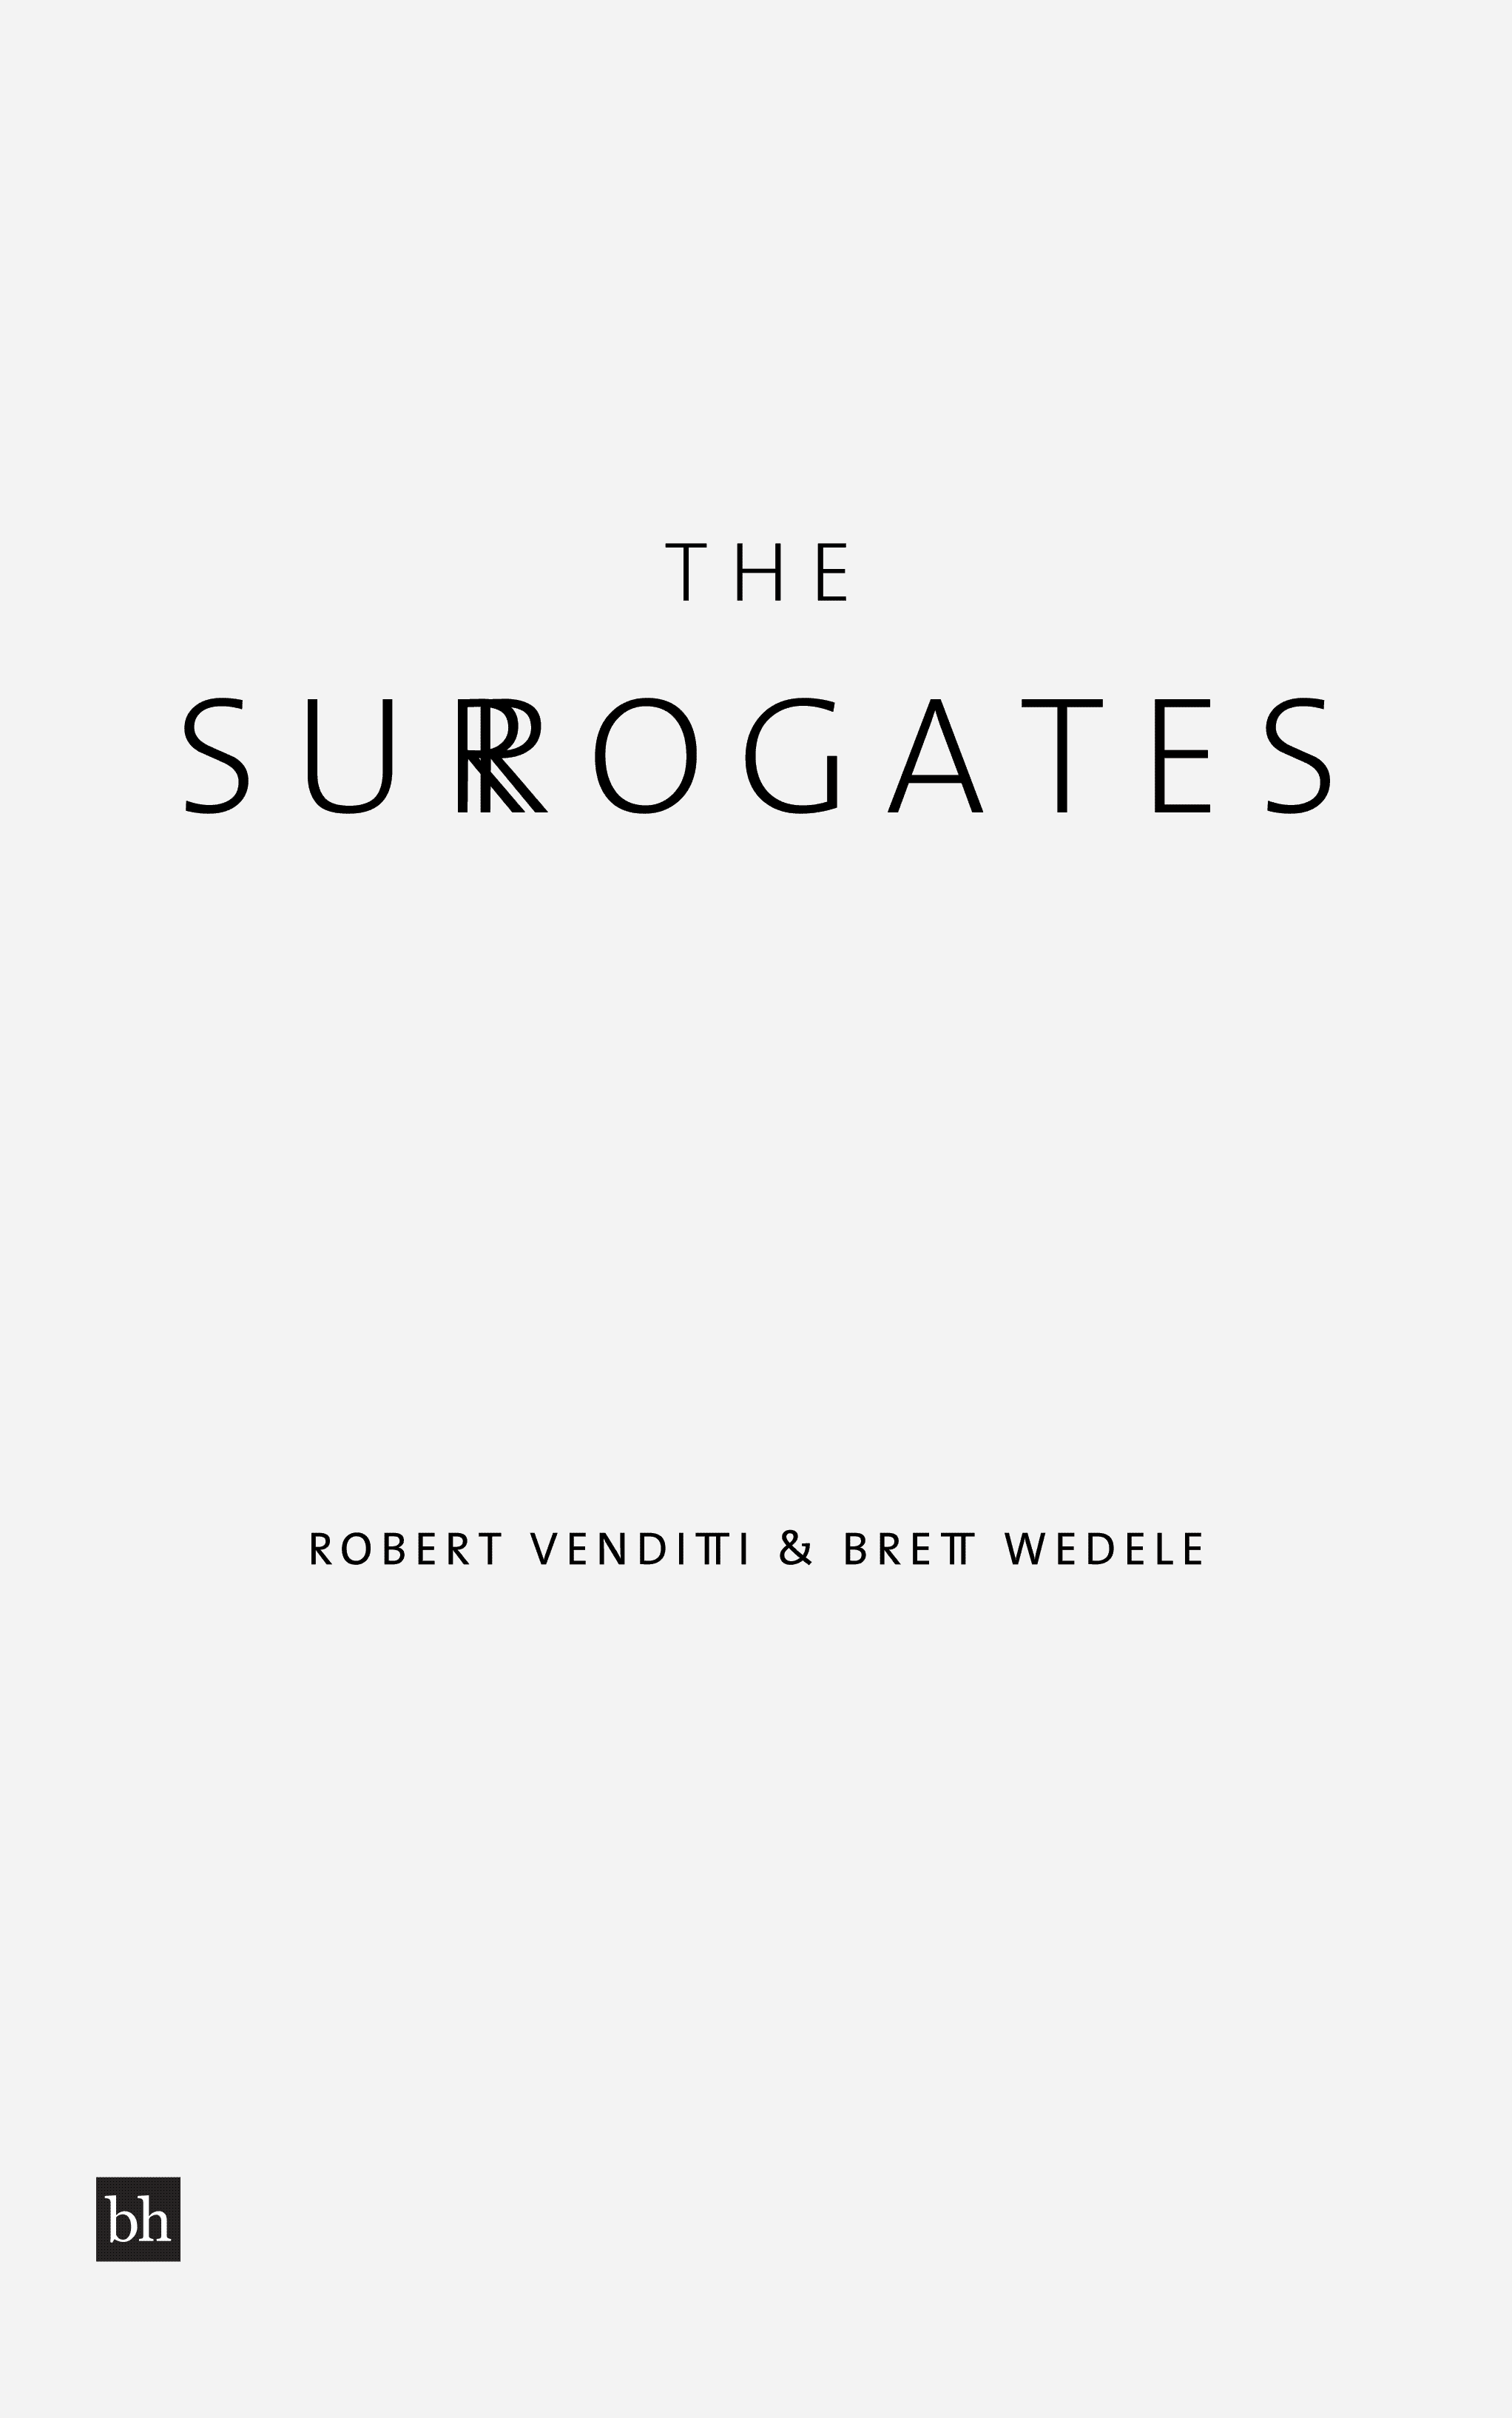 The Surrogates by Robert Venditti